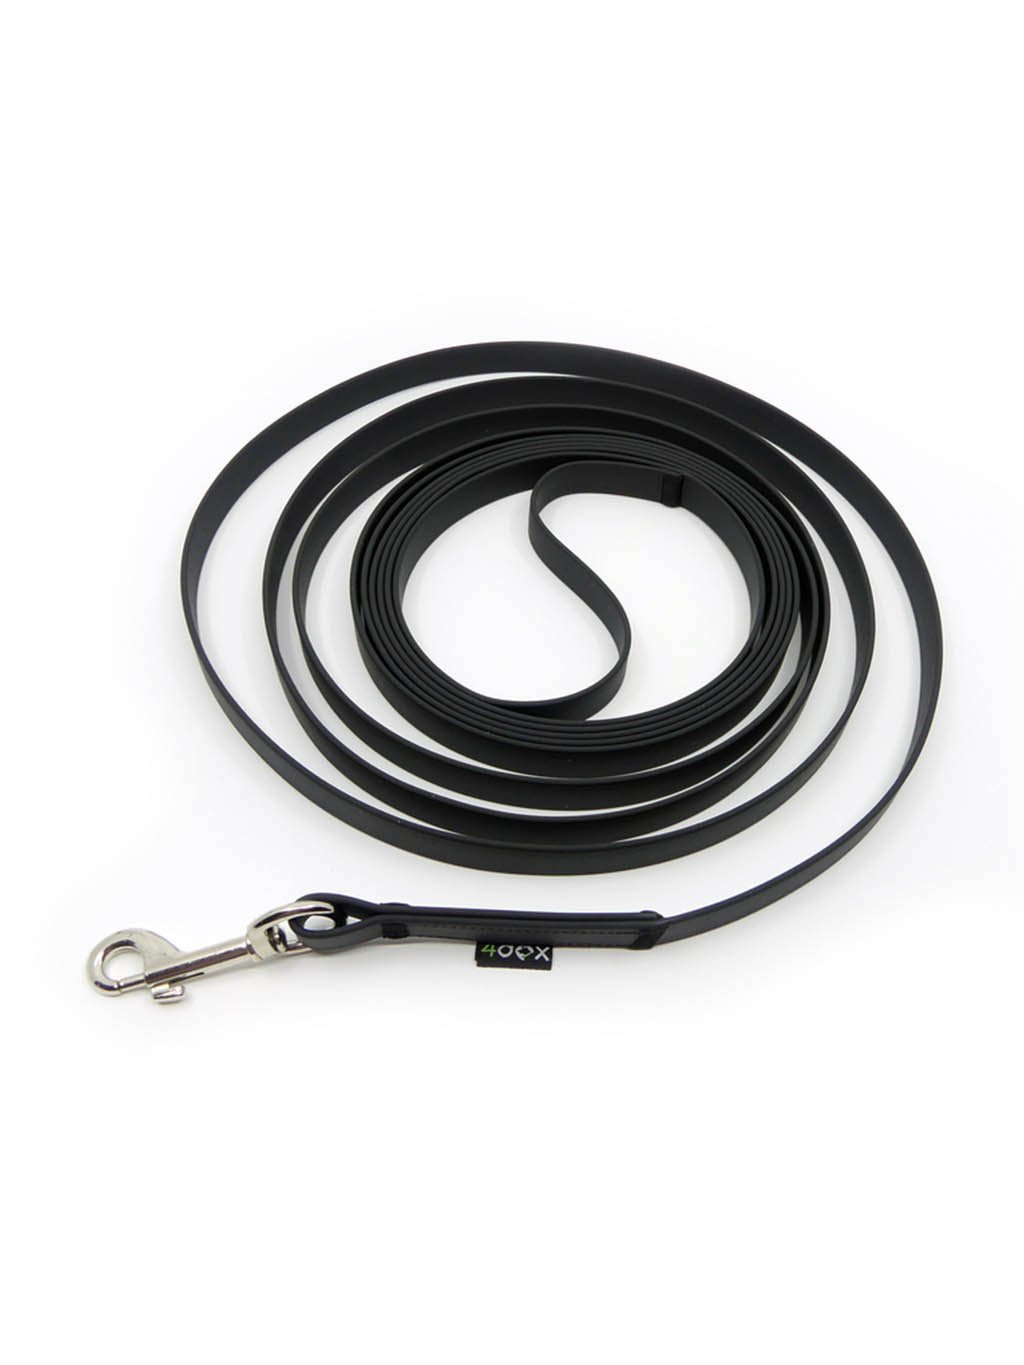 Long line leash - mud proof - customized leash